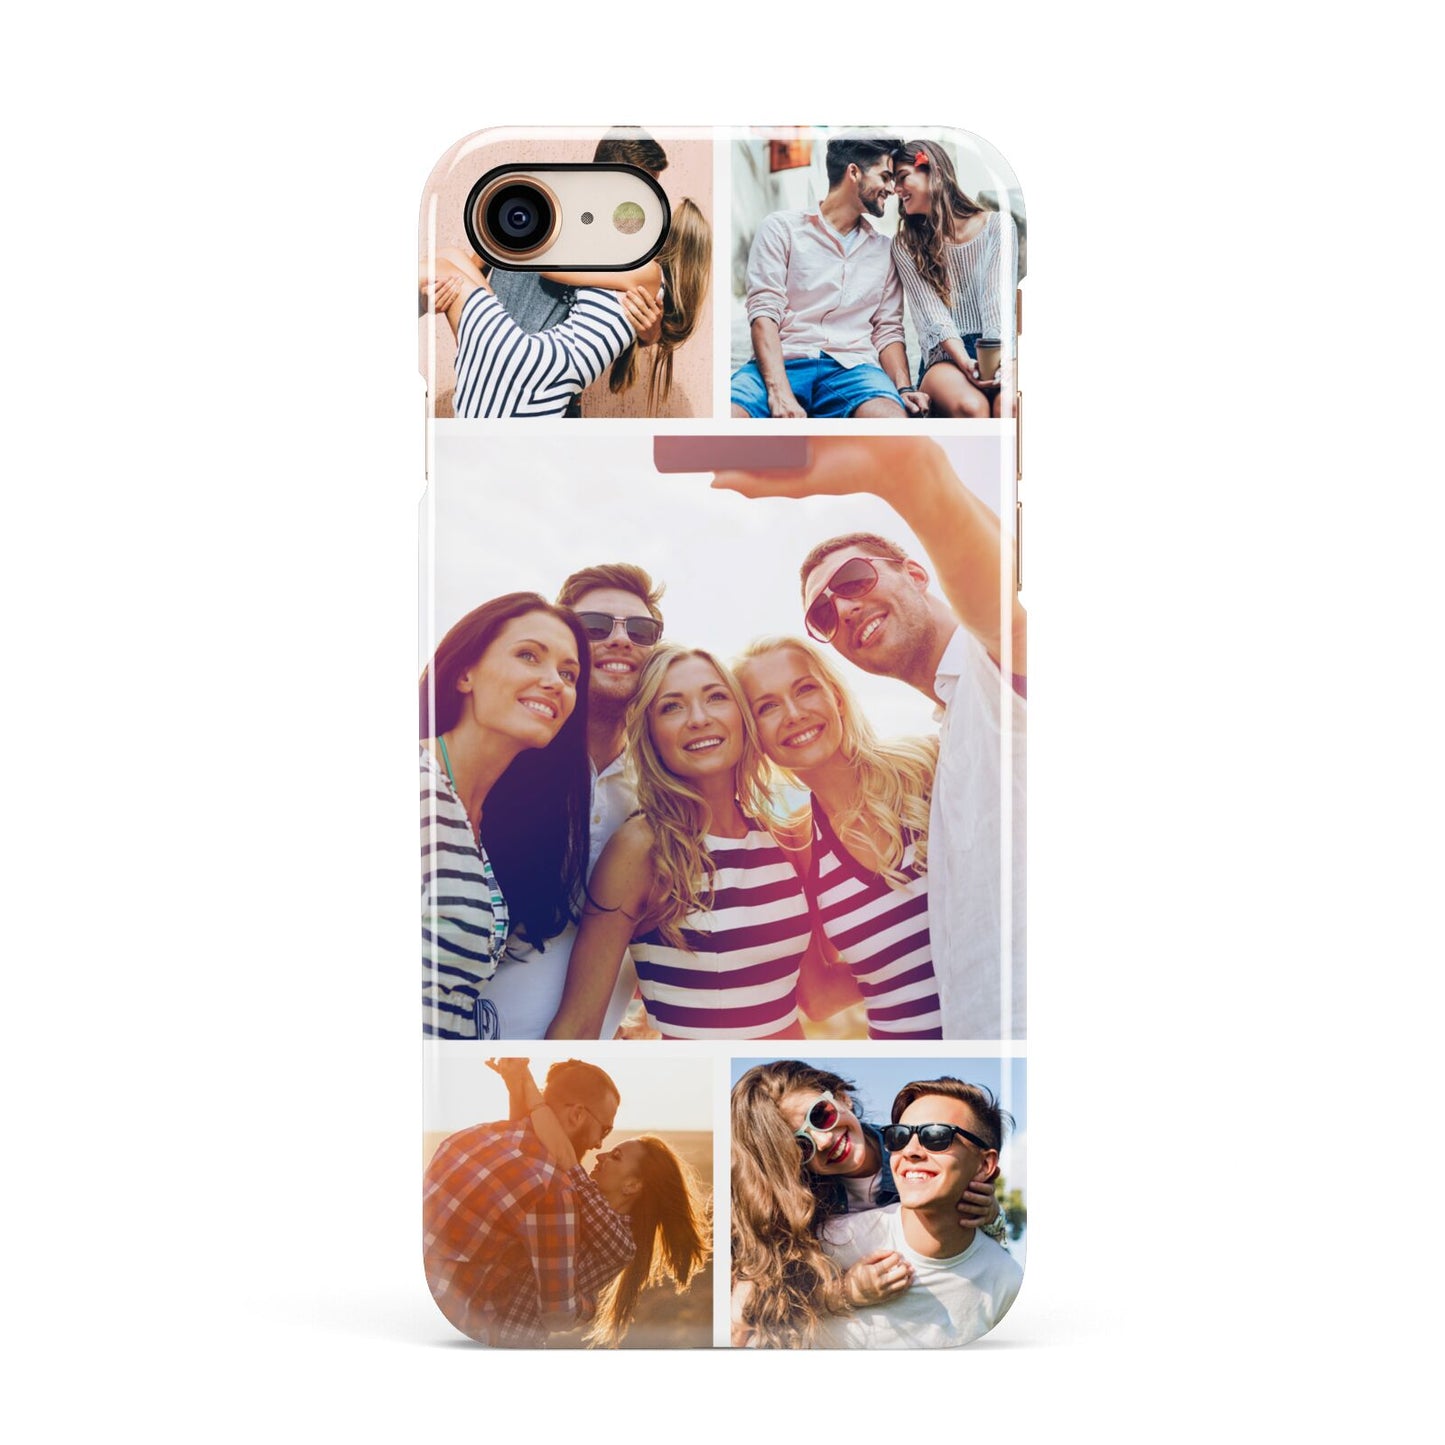 Tile Photo Collage Upload Apple iPhone 7 8 3D Snap Case